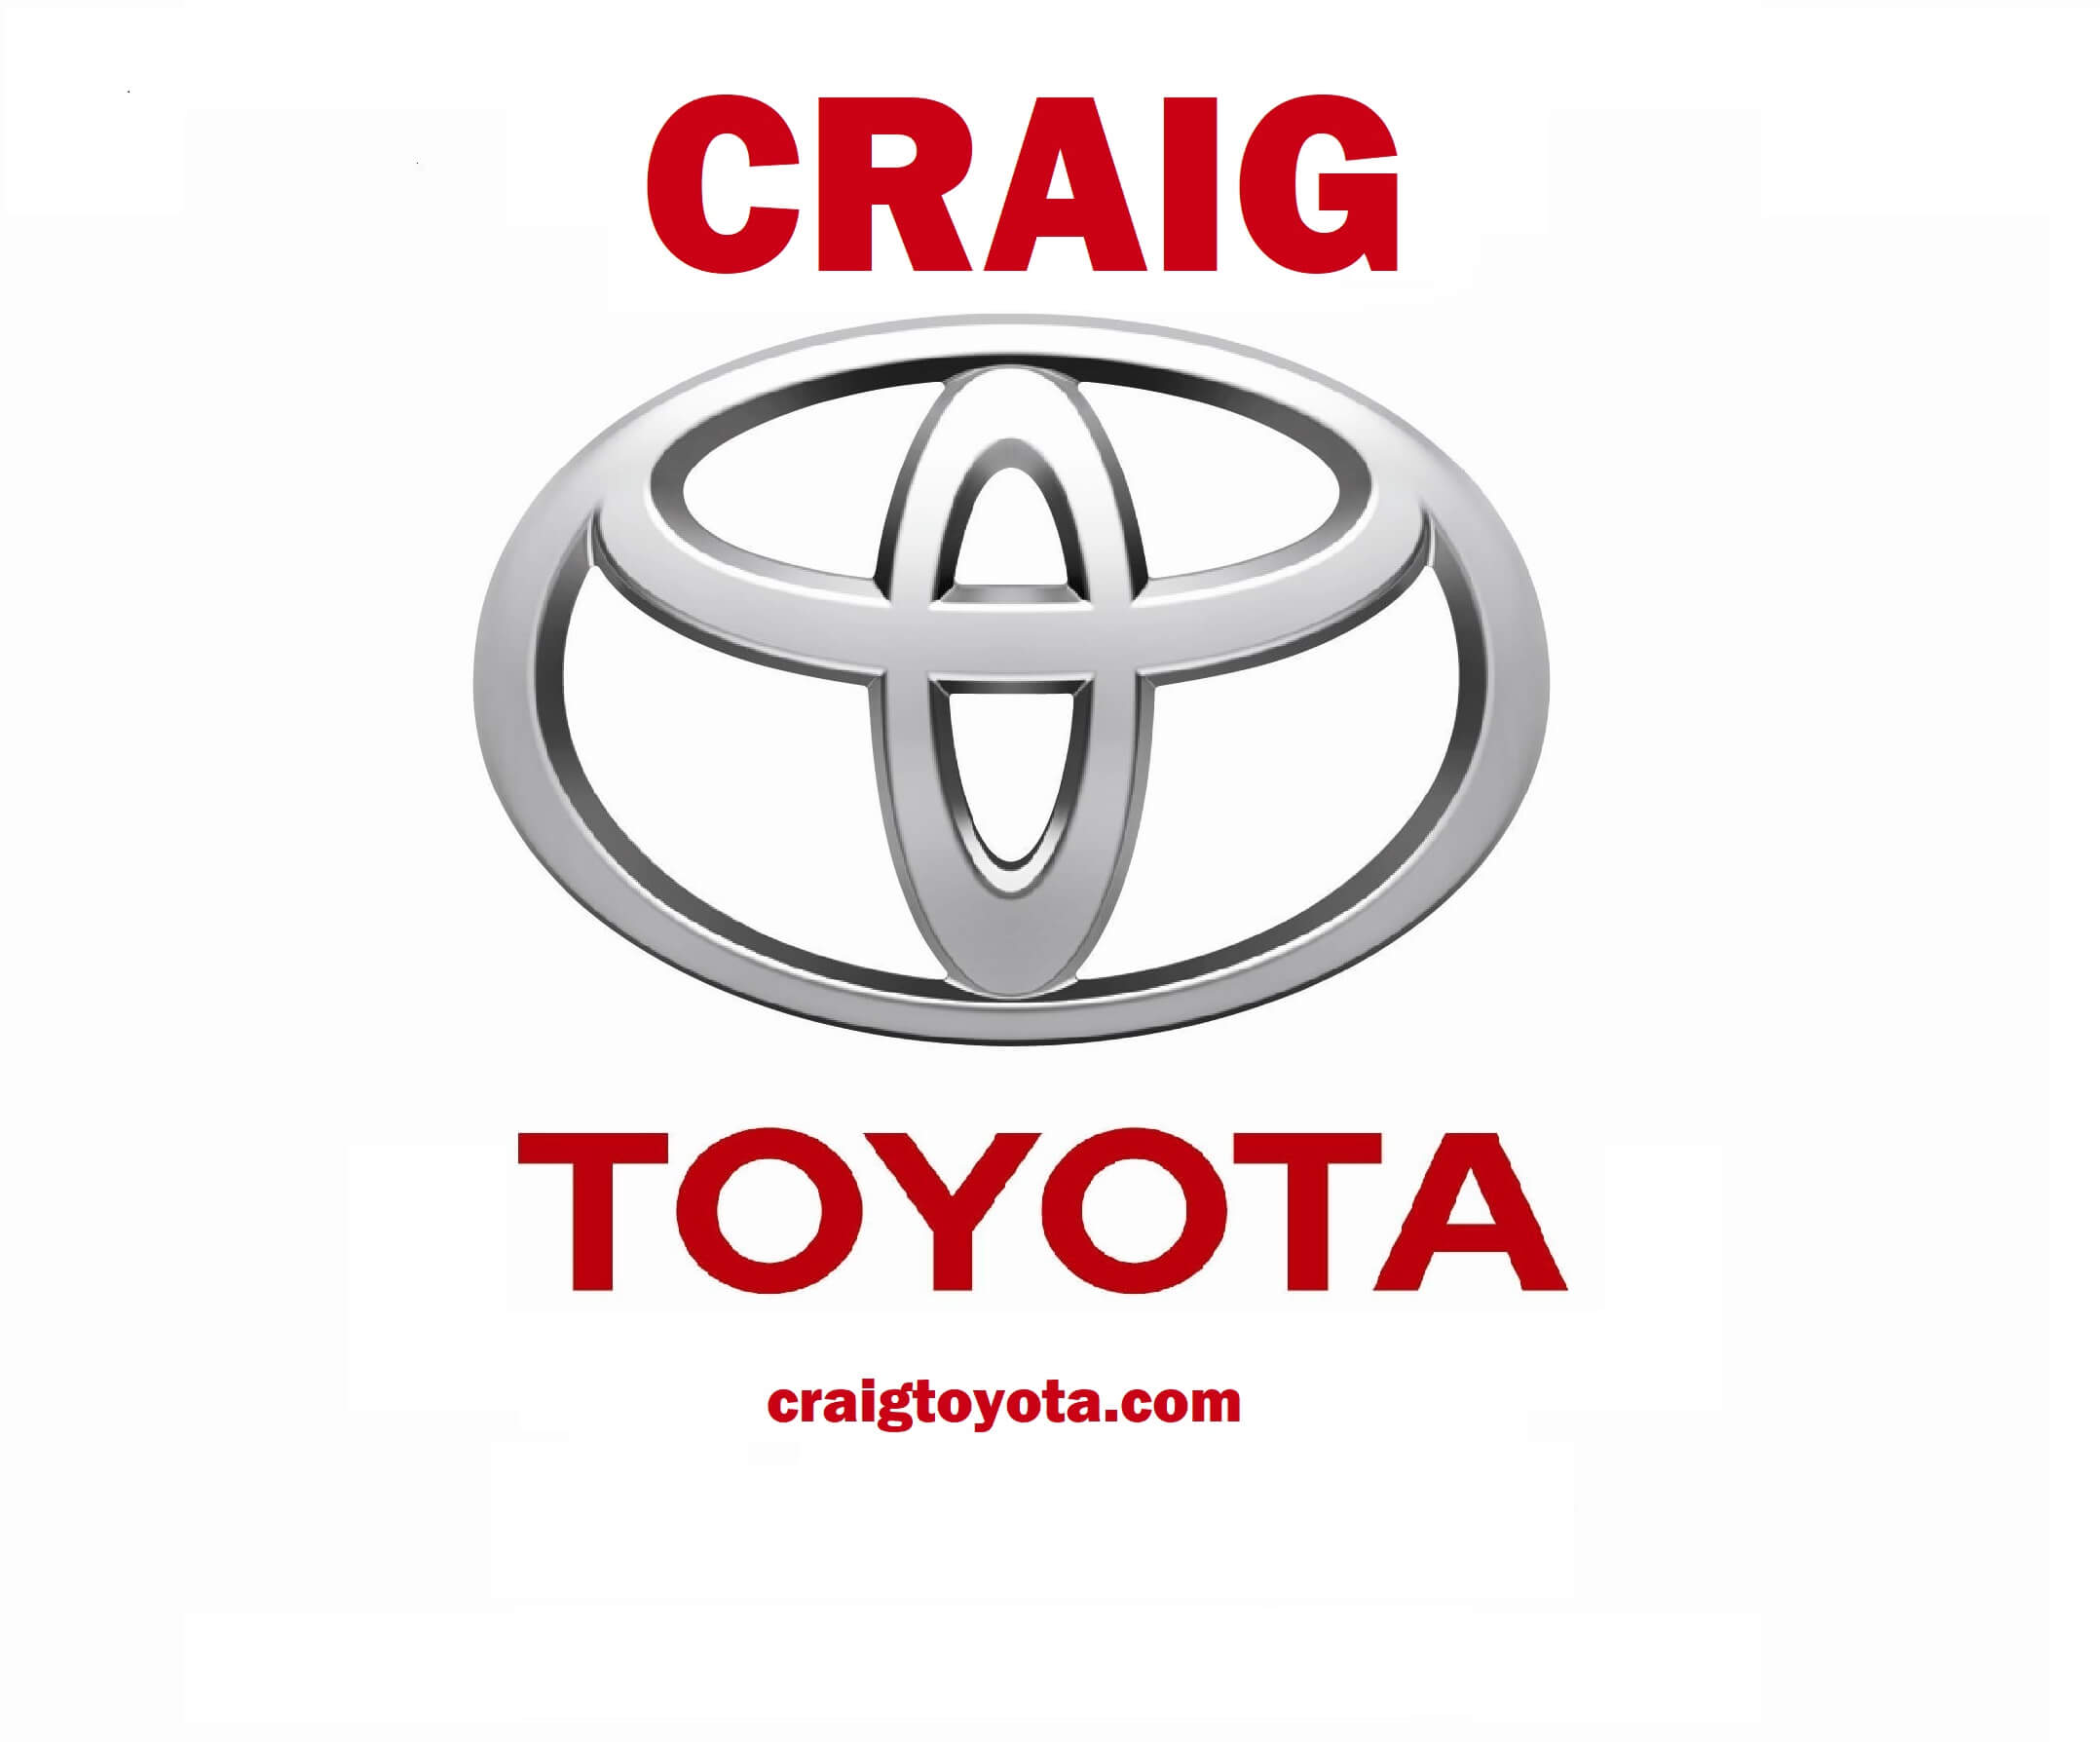 Craig_Toyota